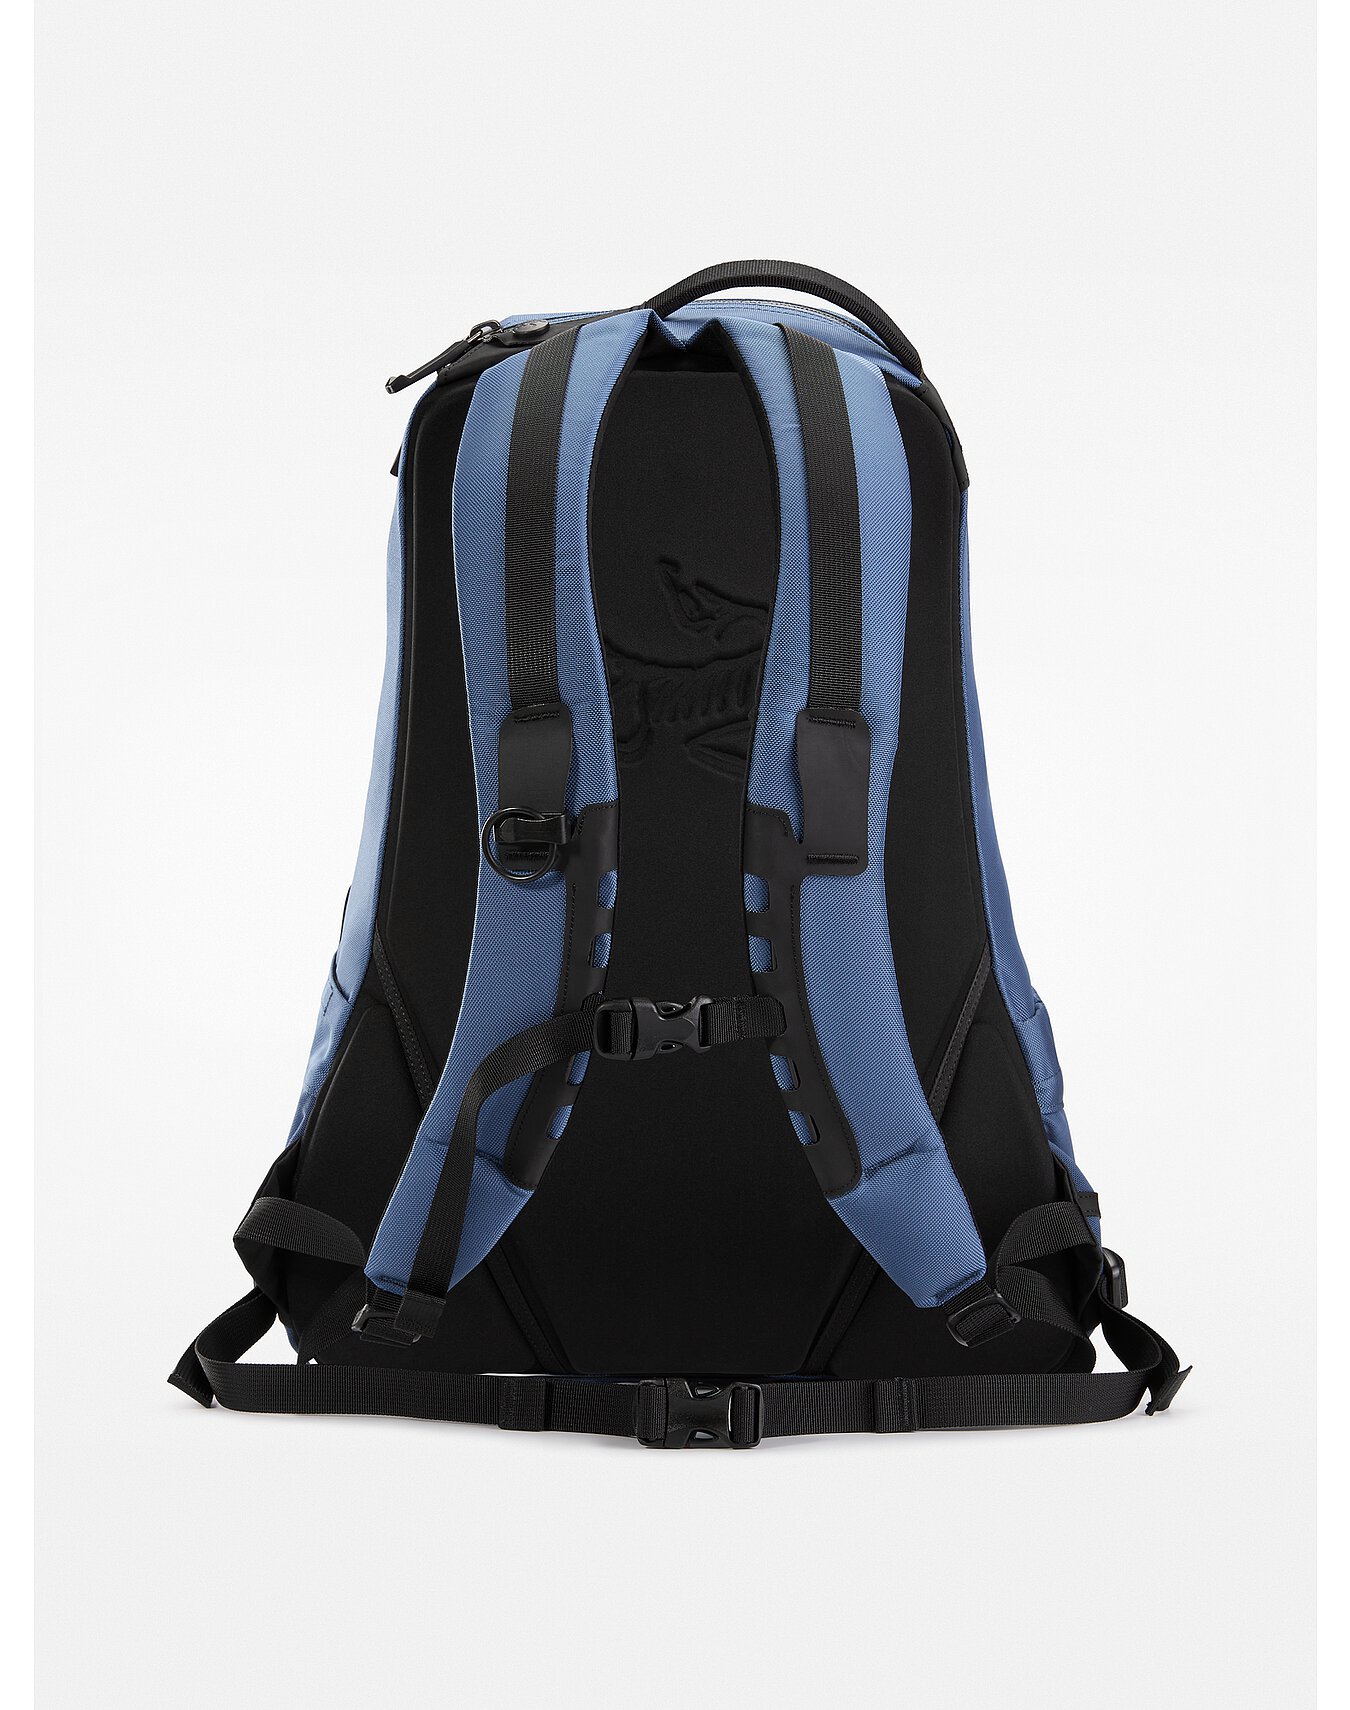 Arro 16 Backpack | Arc'teryx Outlet